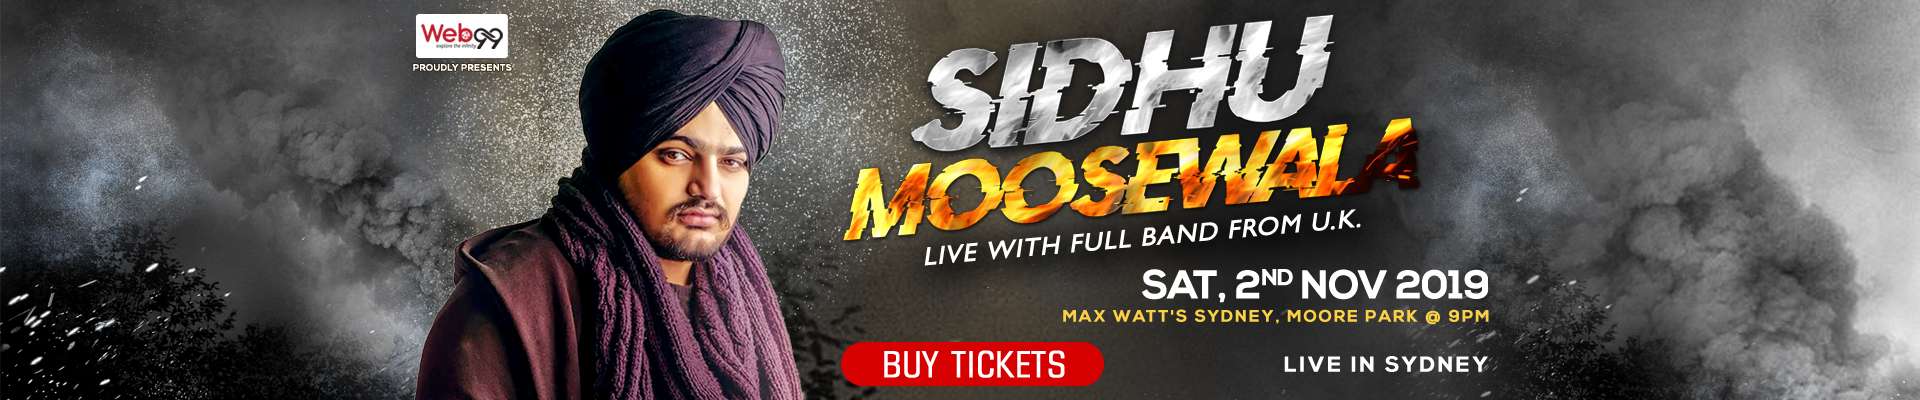 Sidhu Moose Wala Live In Sydney 2019